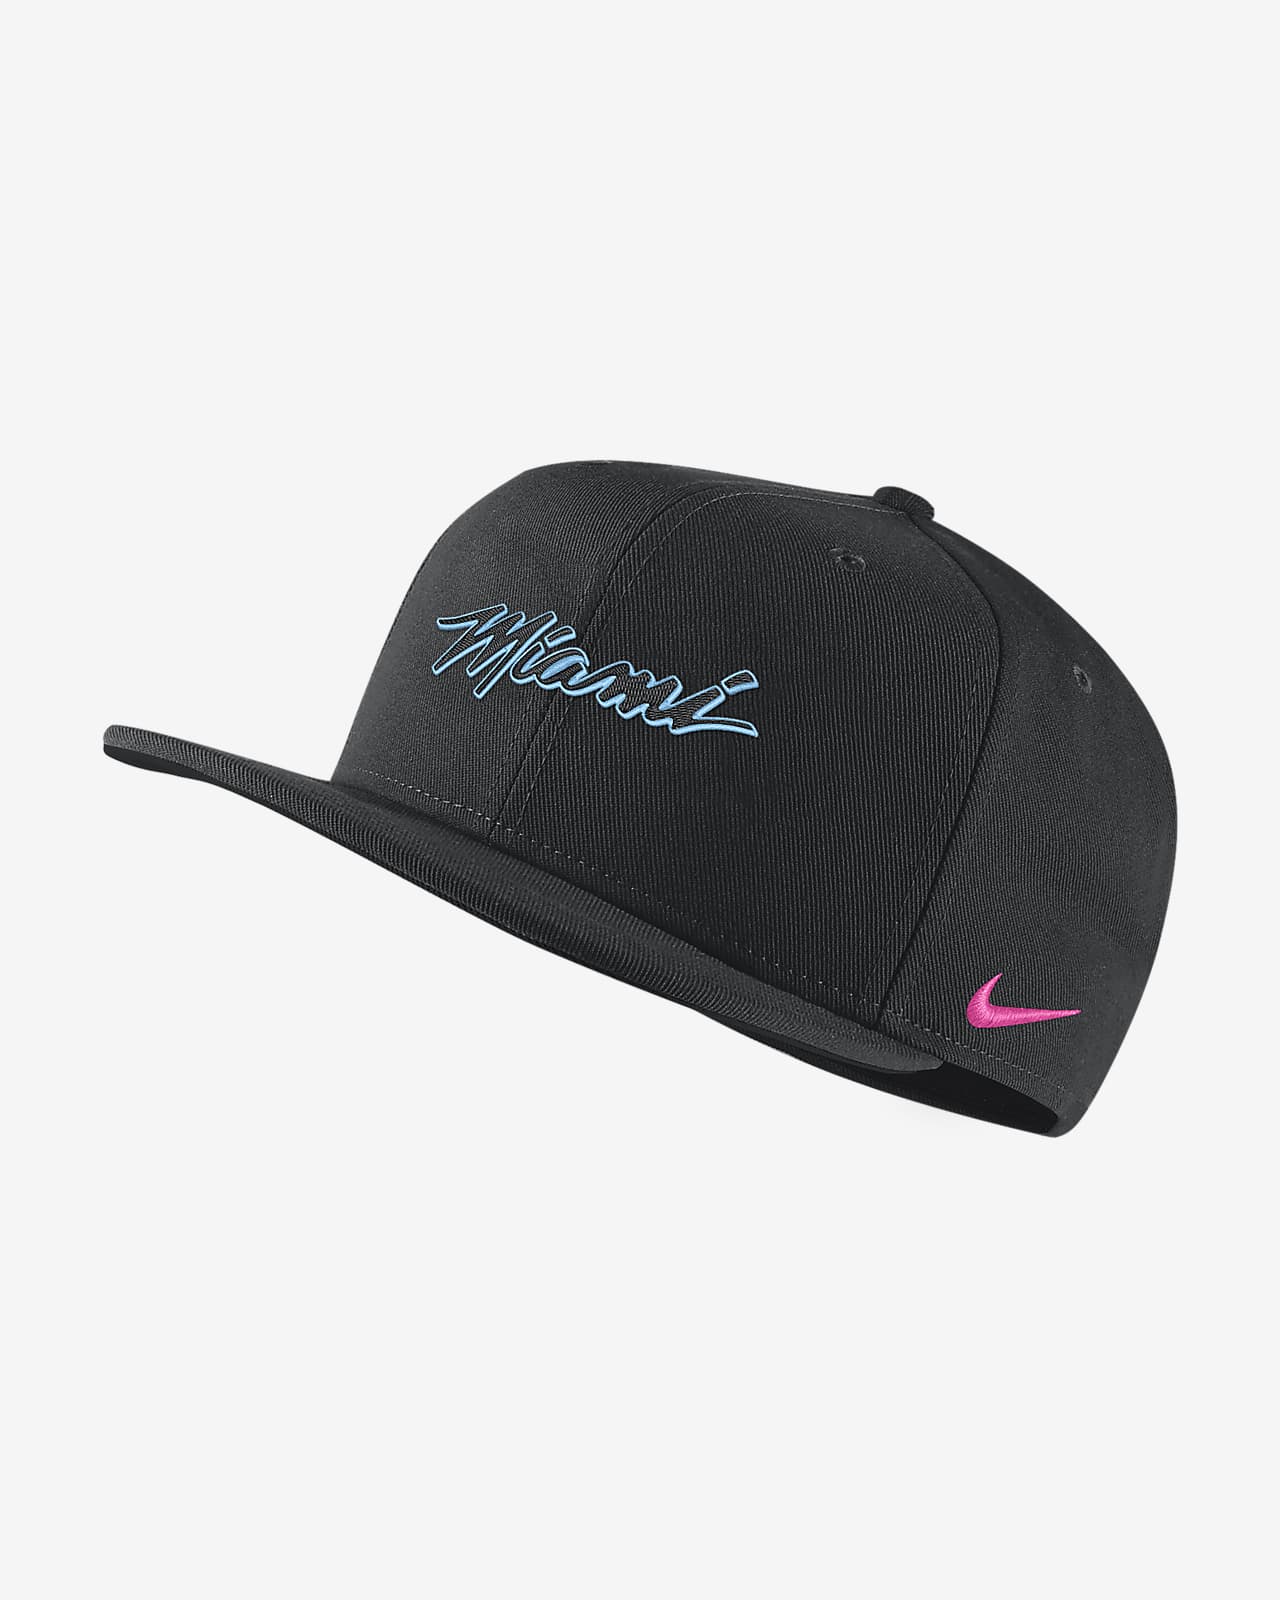 Miami Heat City Edition Nike Pro NBA Cap